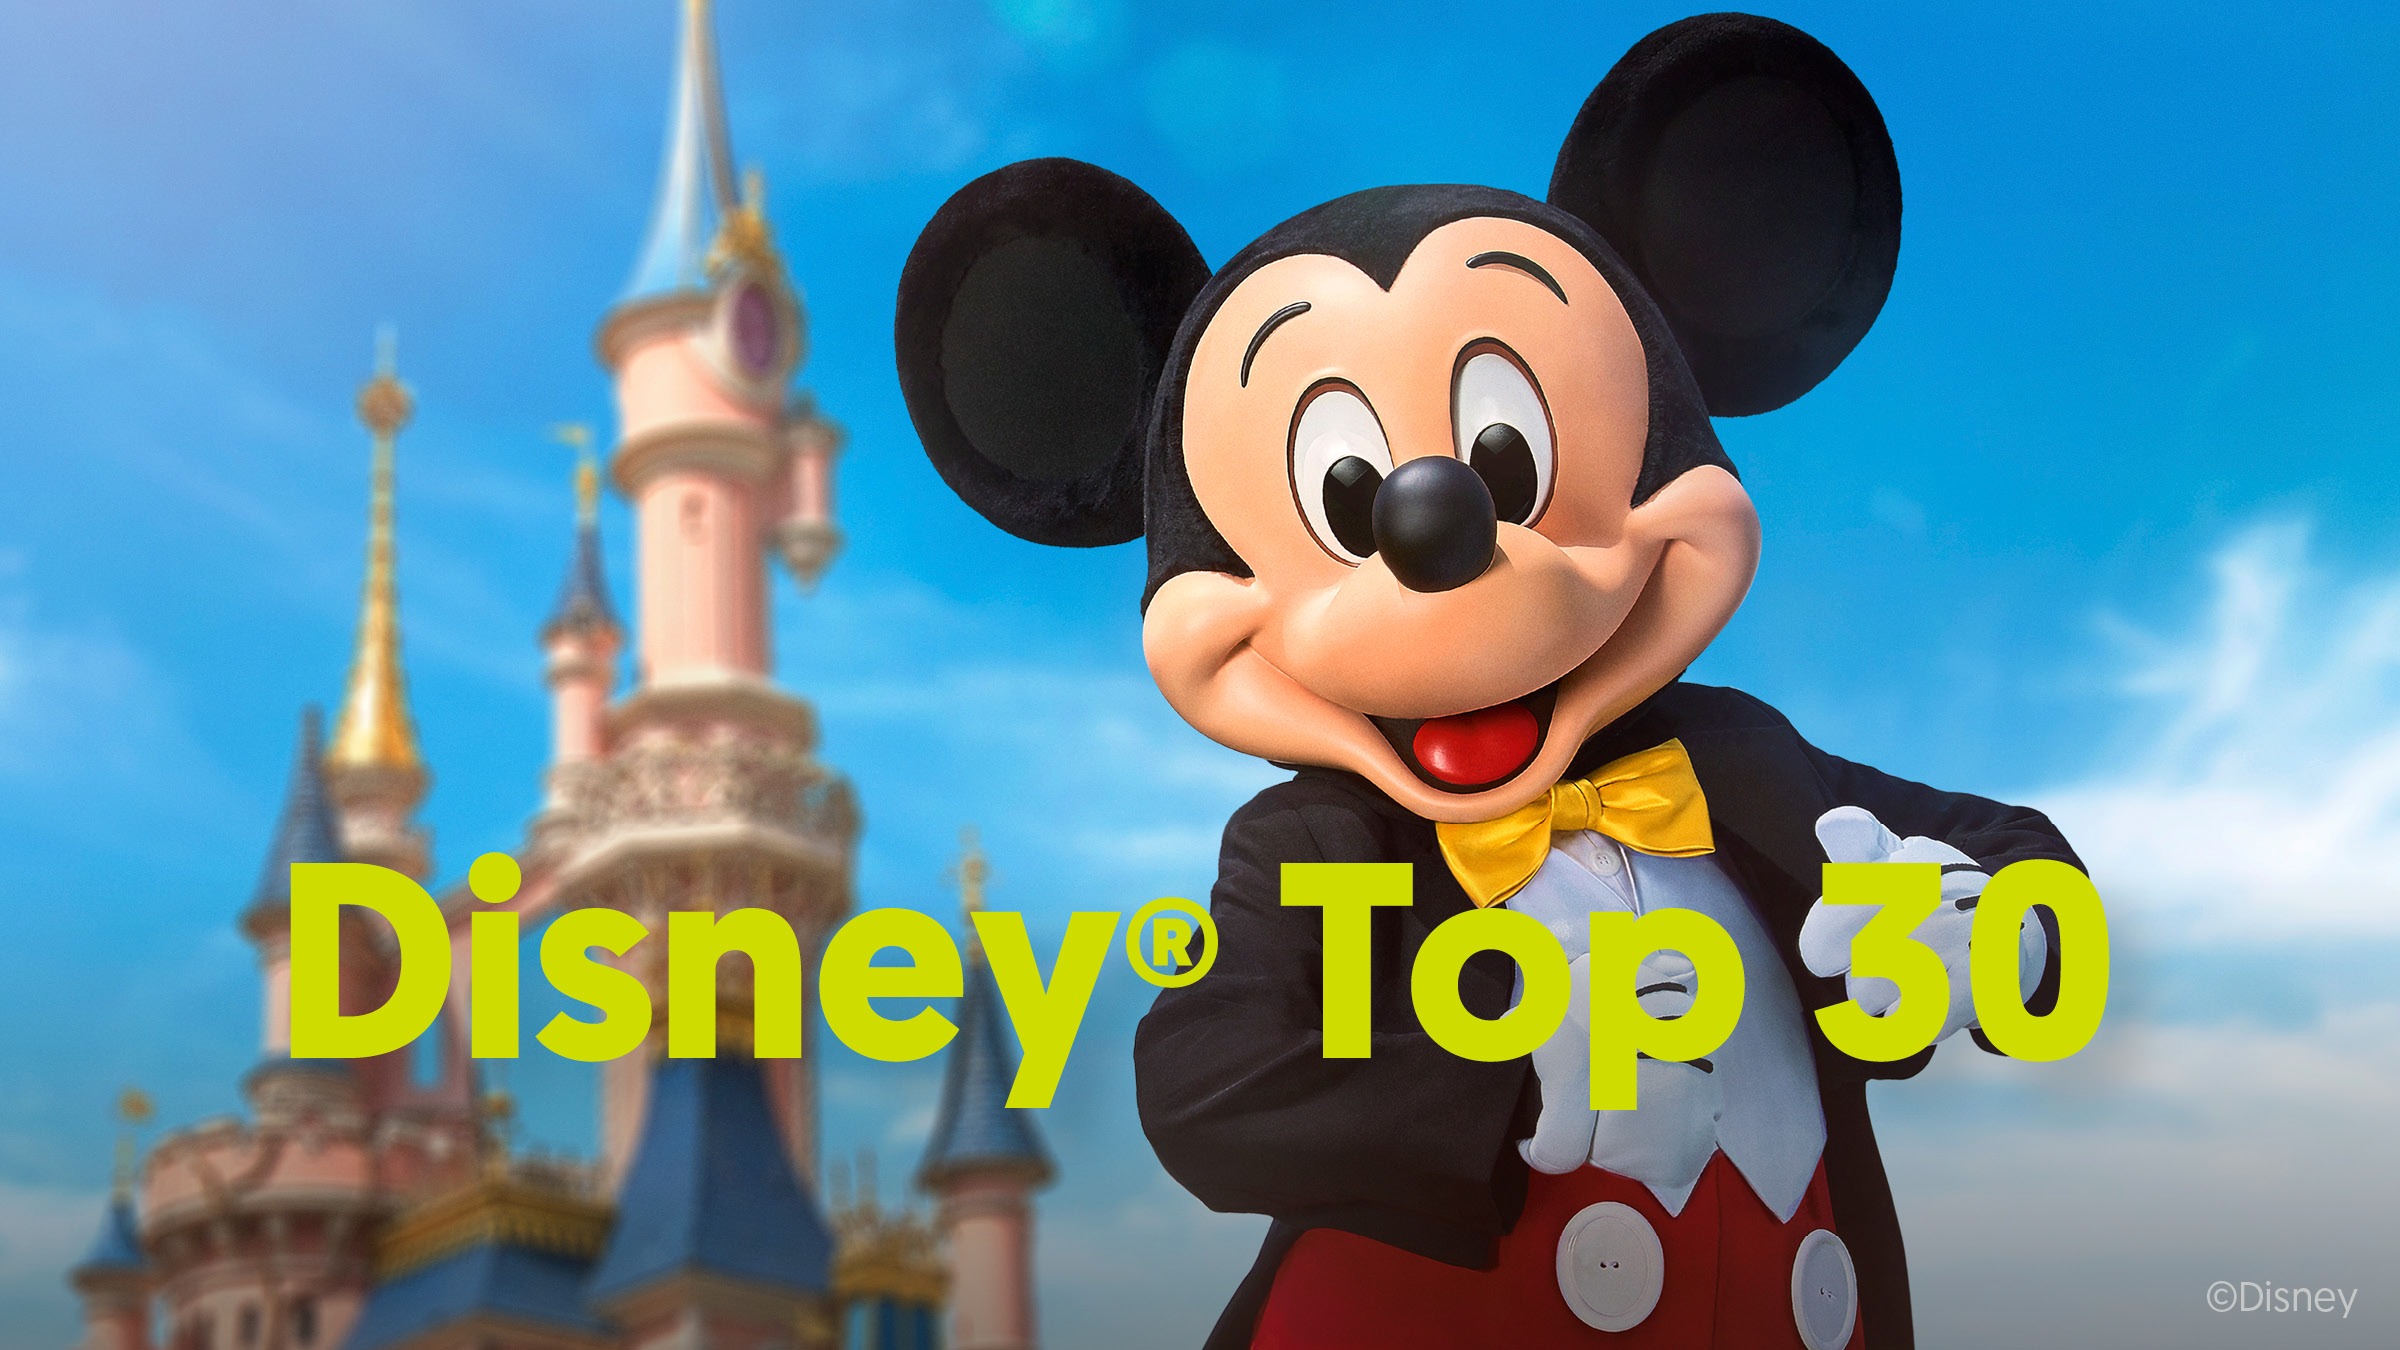 Disney top 30   aankondiging